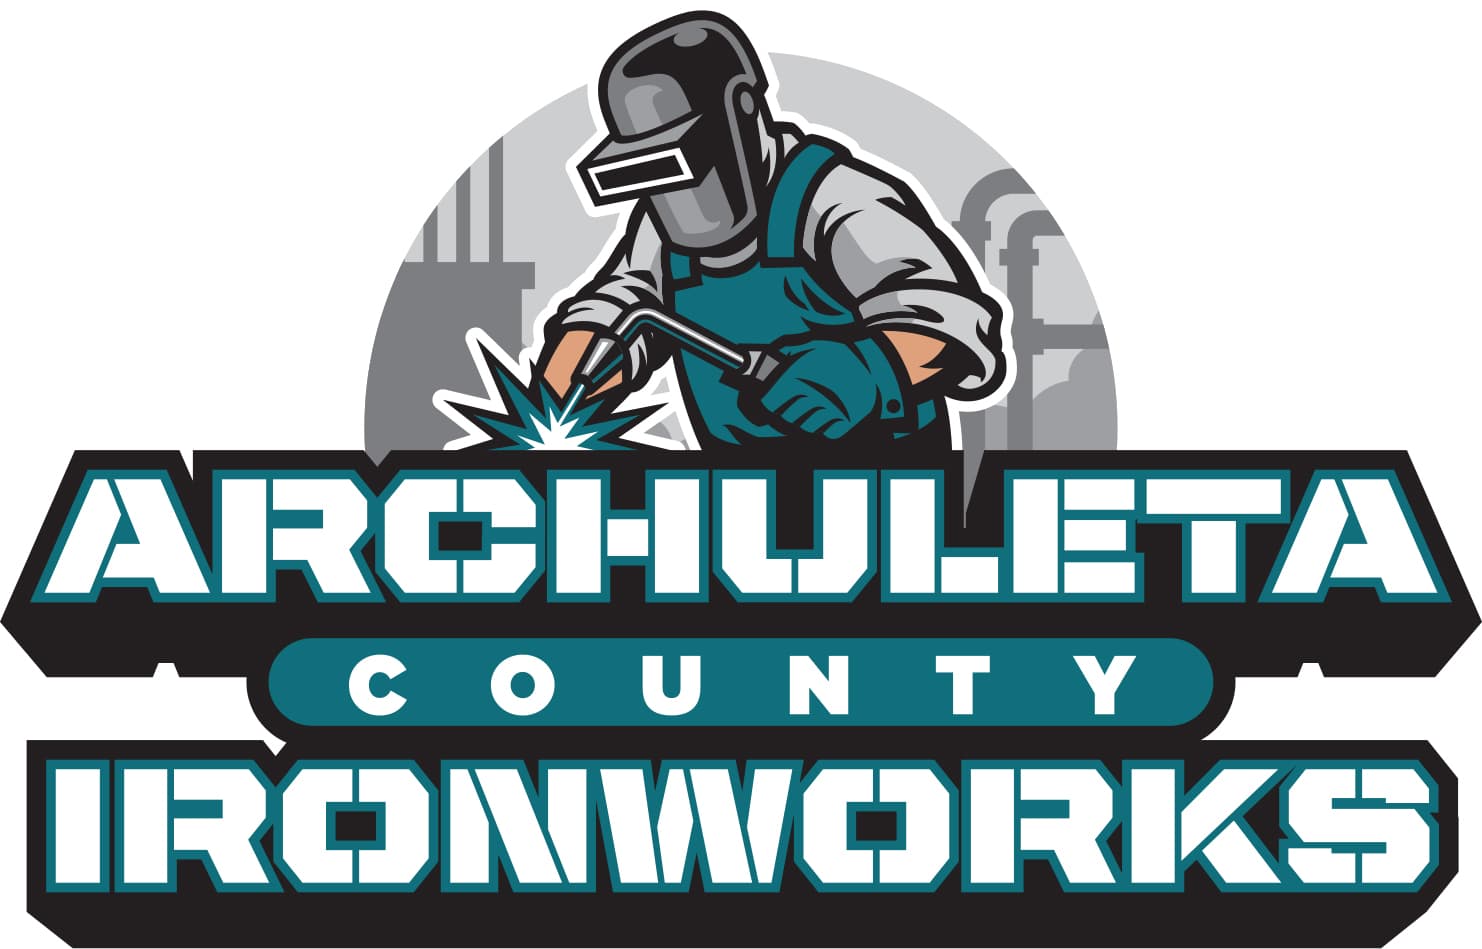 Archuleta County Iron Works